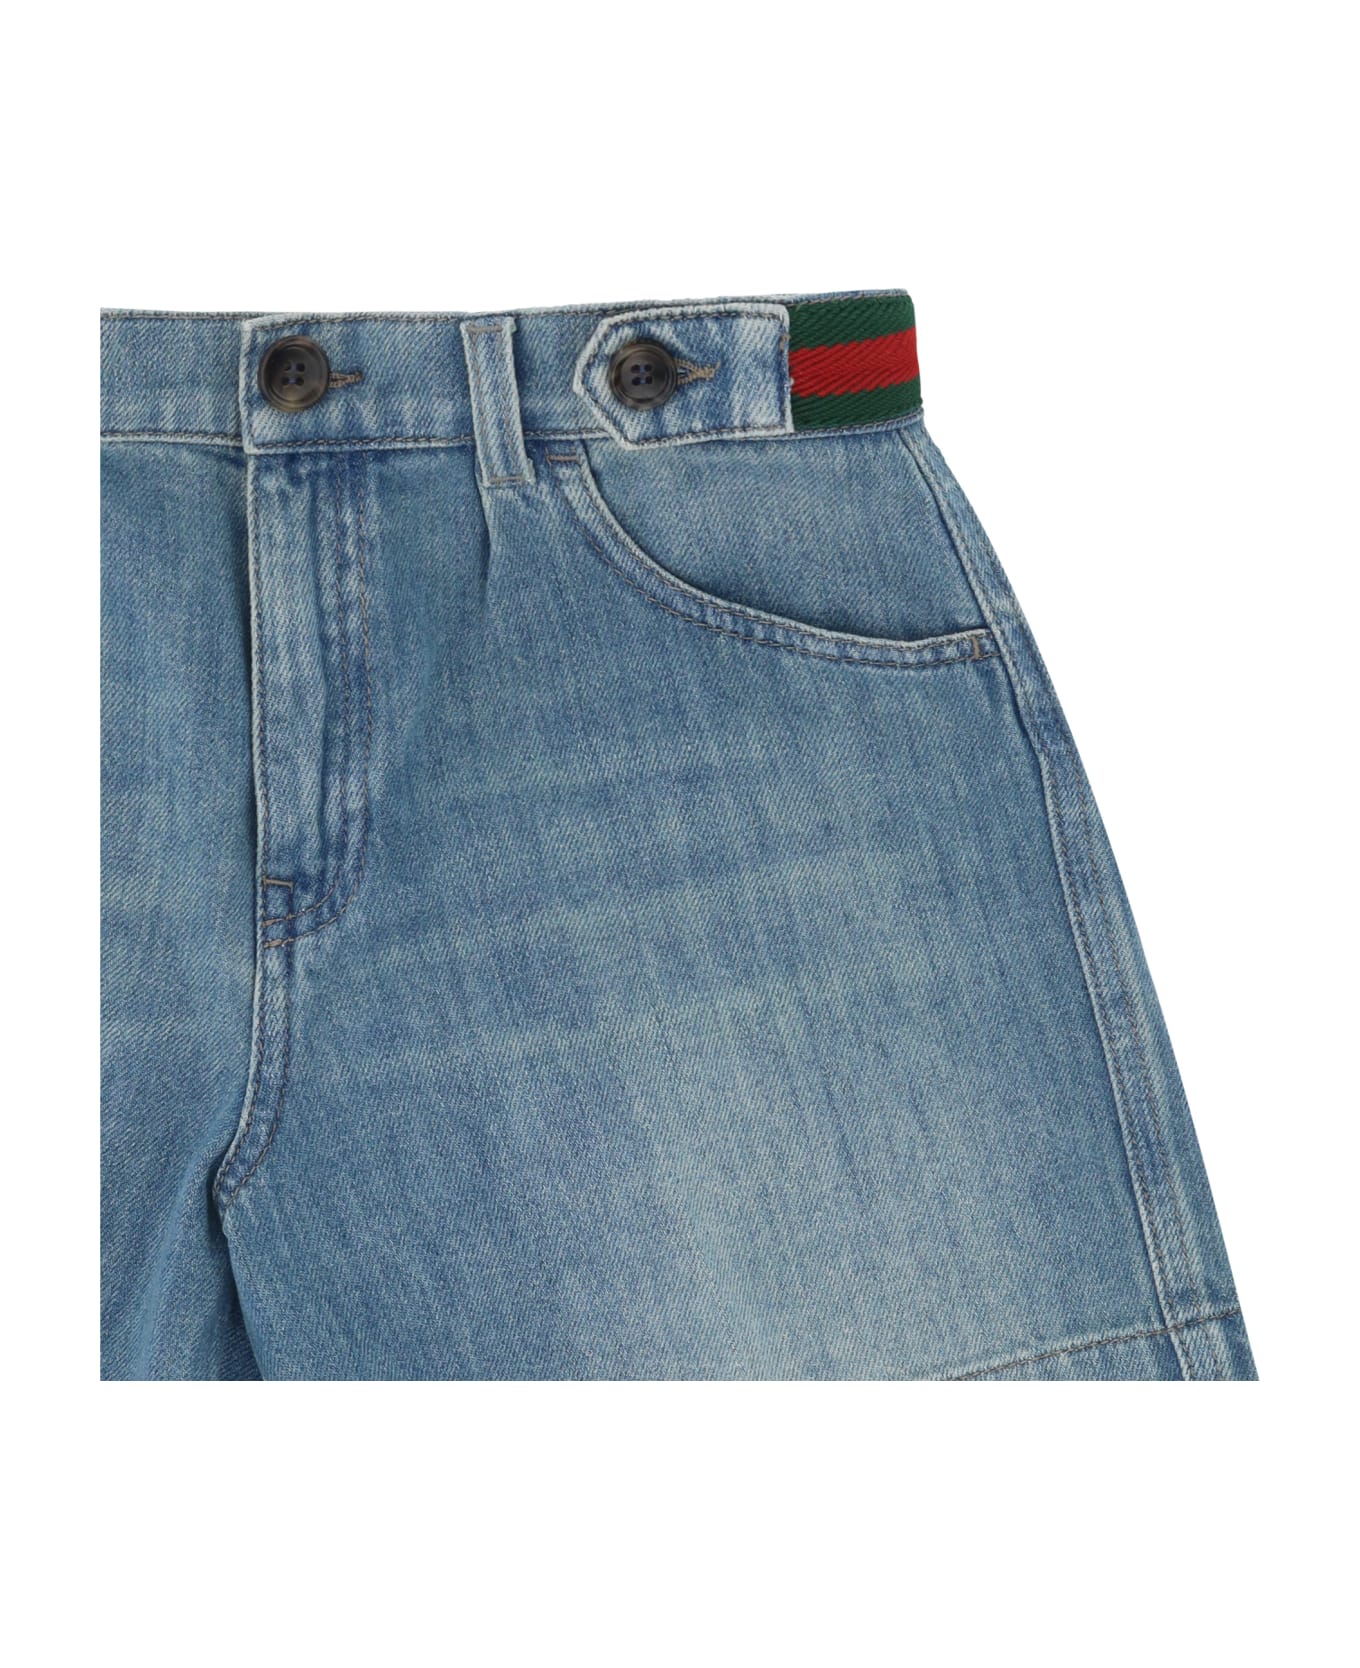 Gucci Bermuda Shorts For Boy - Blue/mix ボトムス